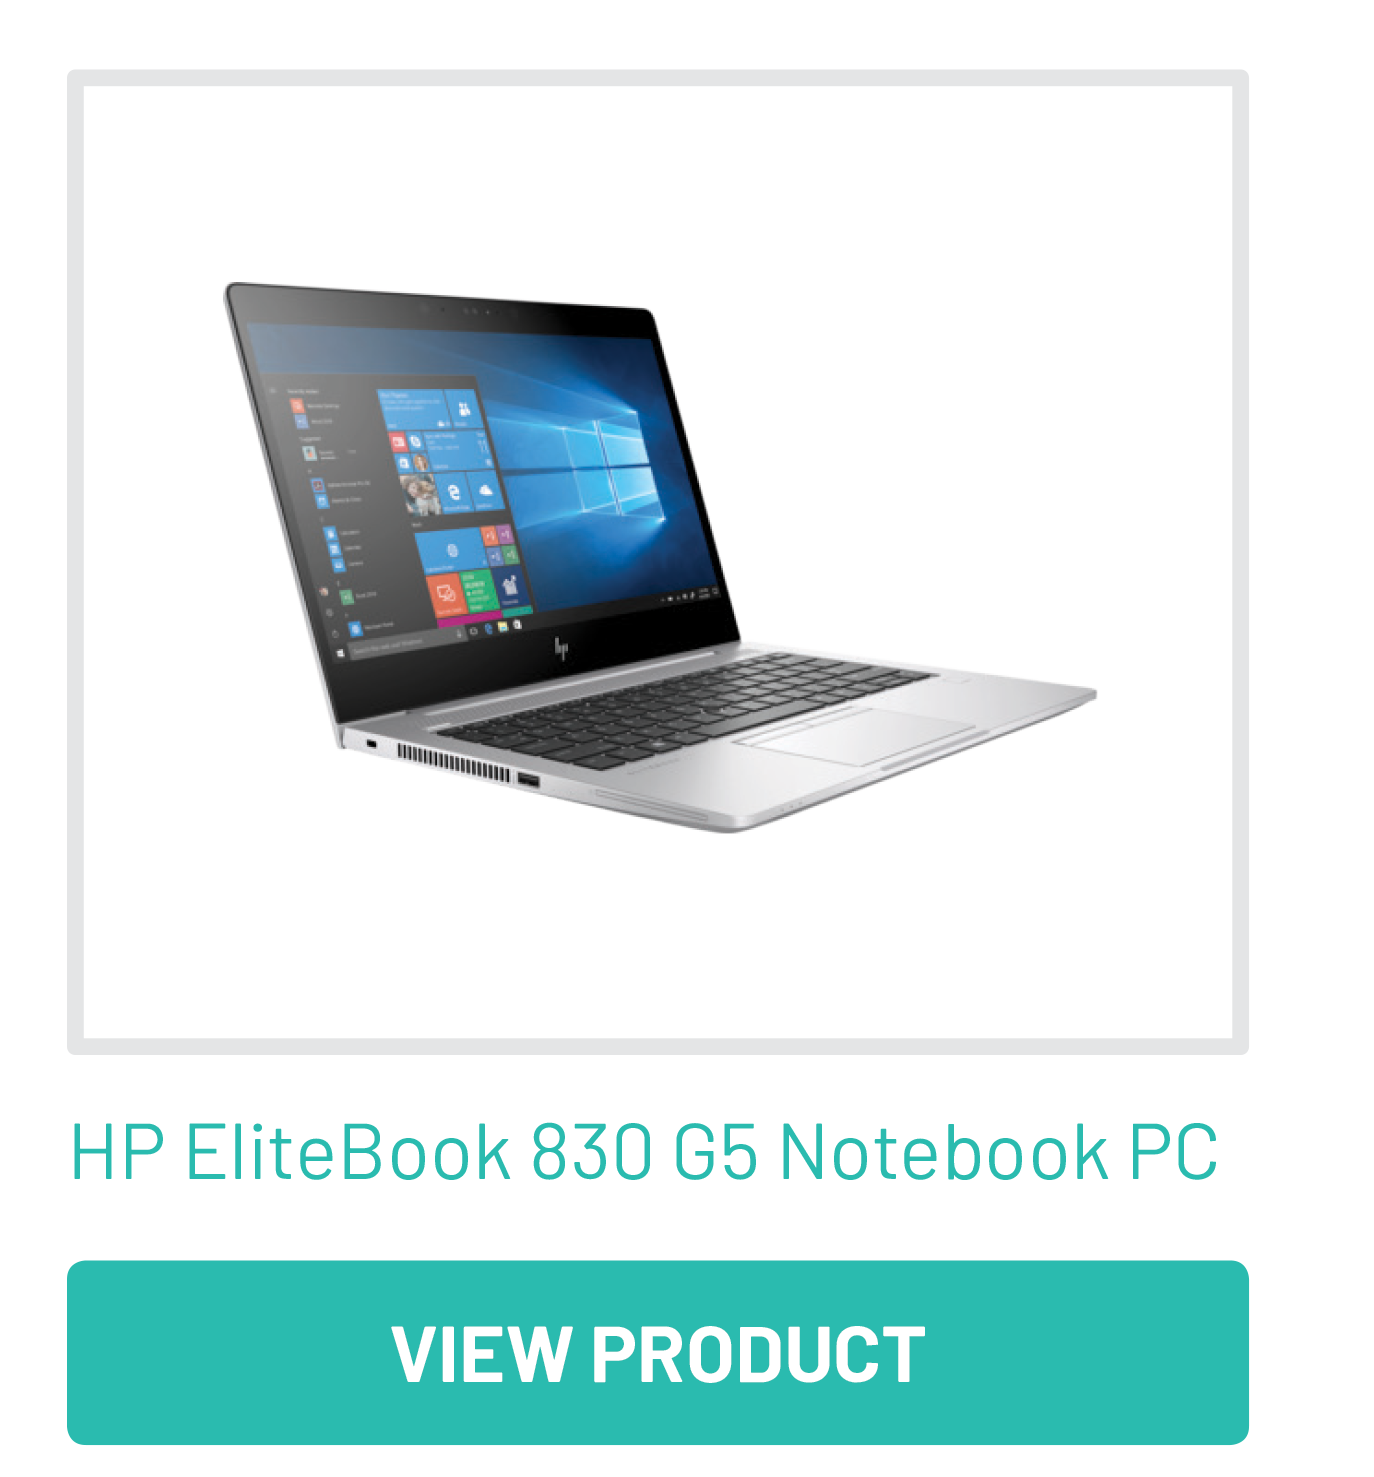 HP Elitebook 830 G5 Notebook PC